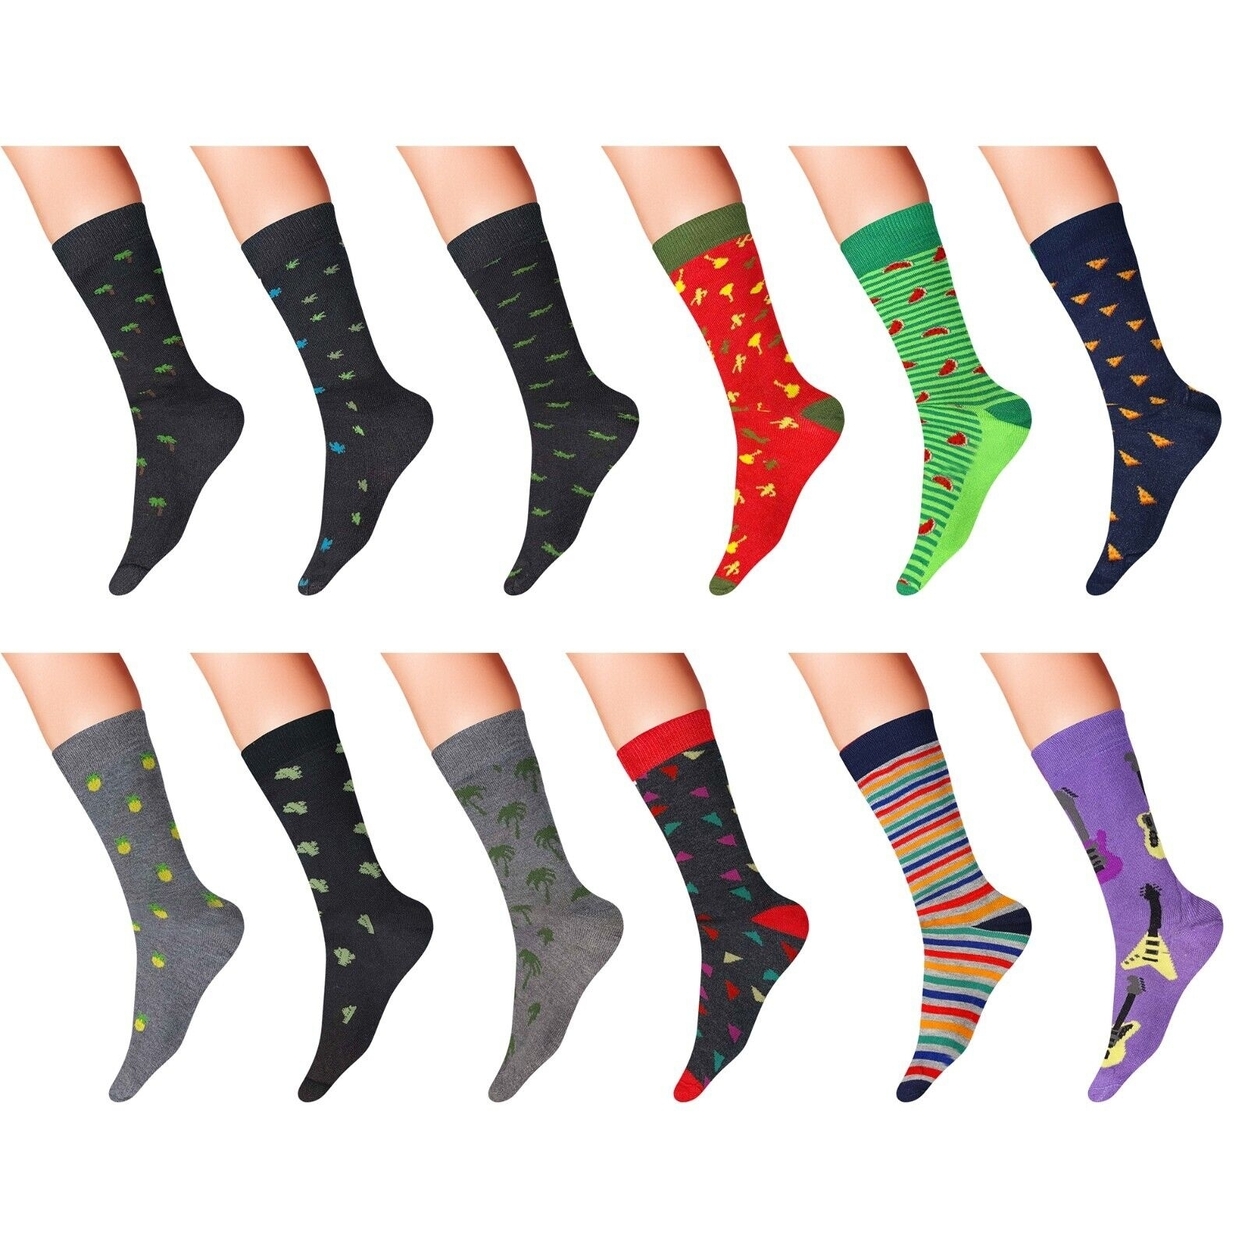 24-Pairs: Men's James Fiallo Premium Quality Fun Printed Dress Socks - Solid